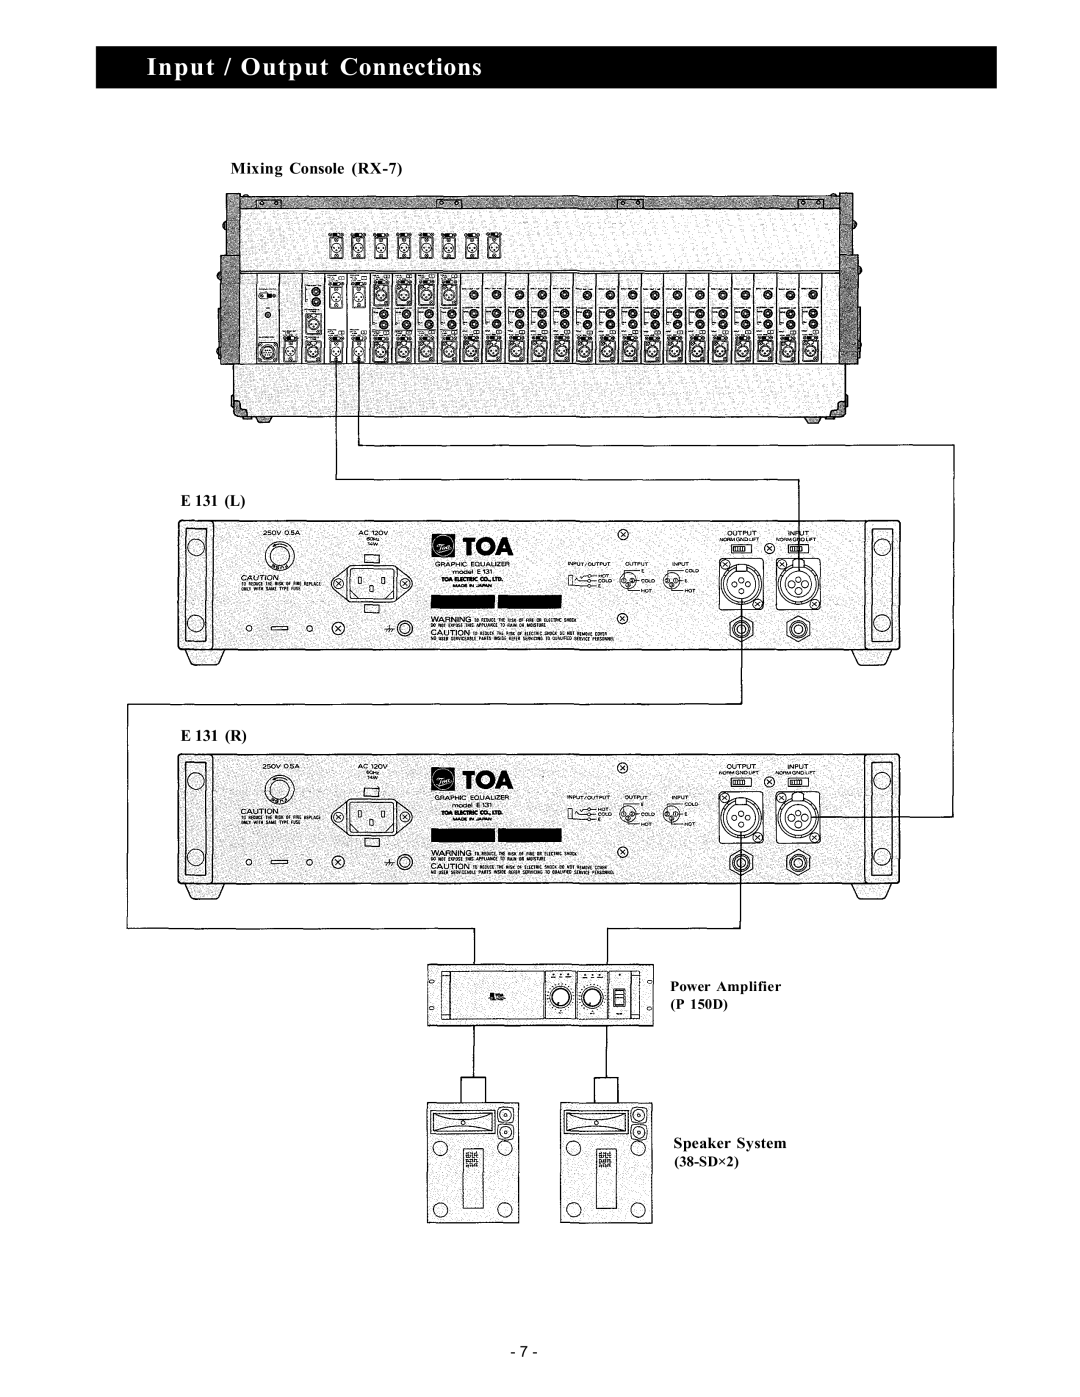 Vizio instruction manual Input / Output Connections, Mixing Console RX-7 E 131 L E 131 R, Speaker System 